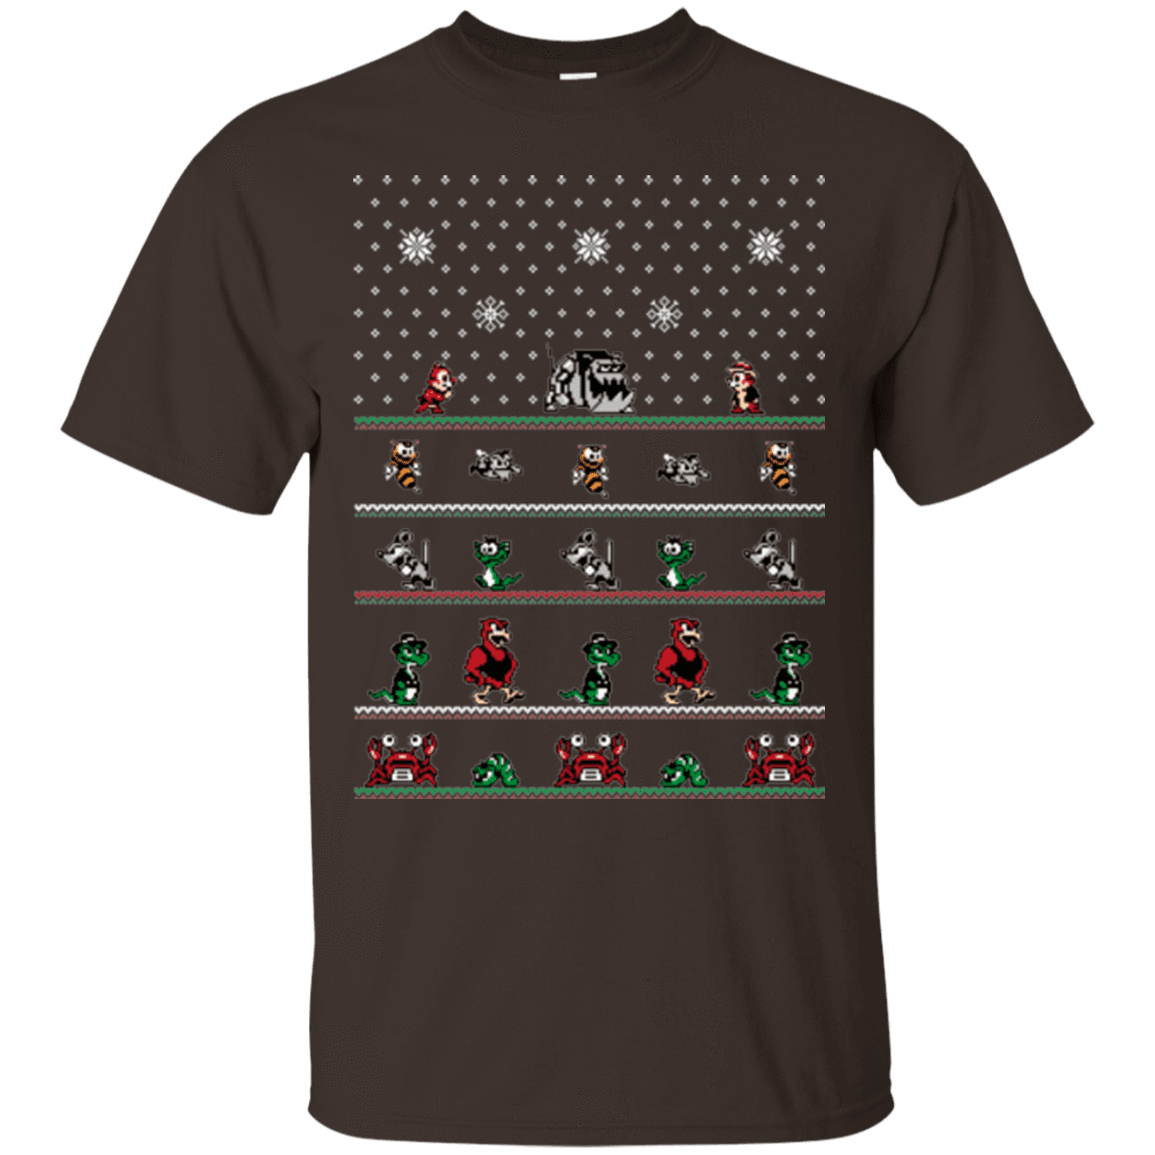 T-Shirts Dark Chocolate / Small Chip n Dale Christmas Rangers T-Shirt